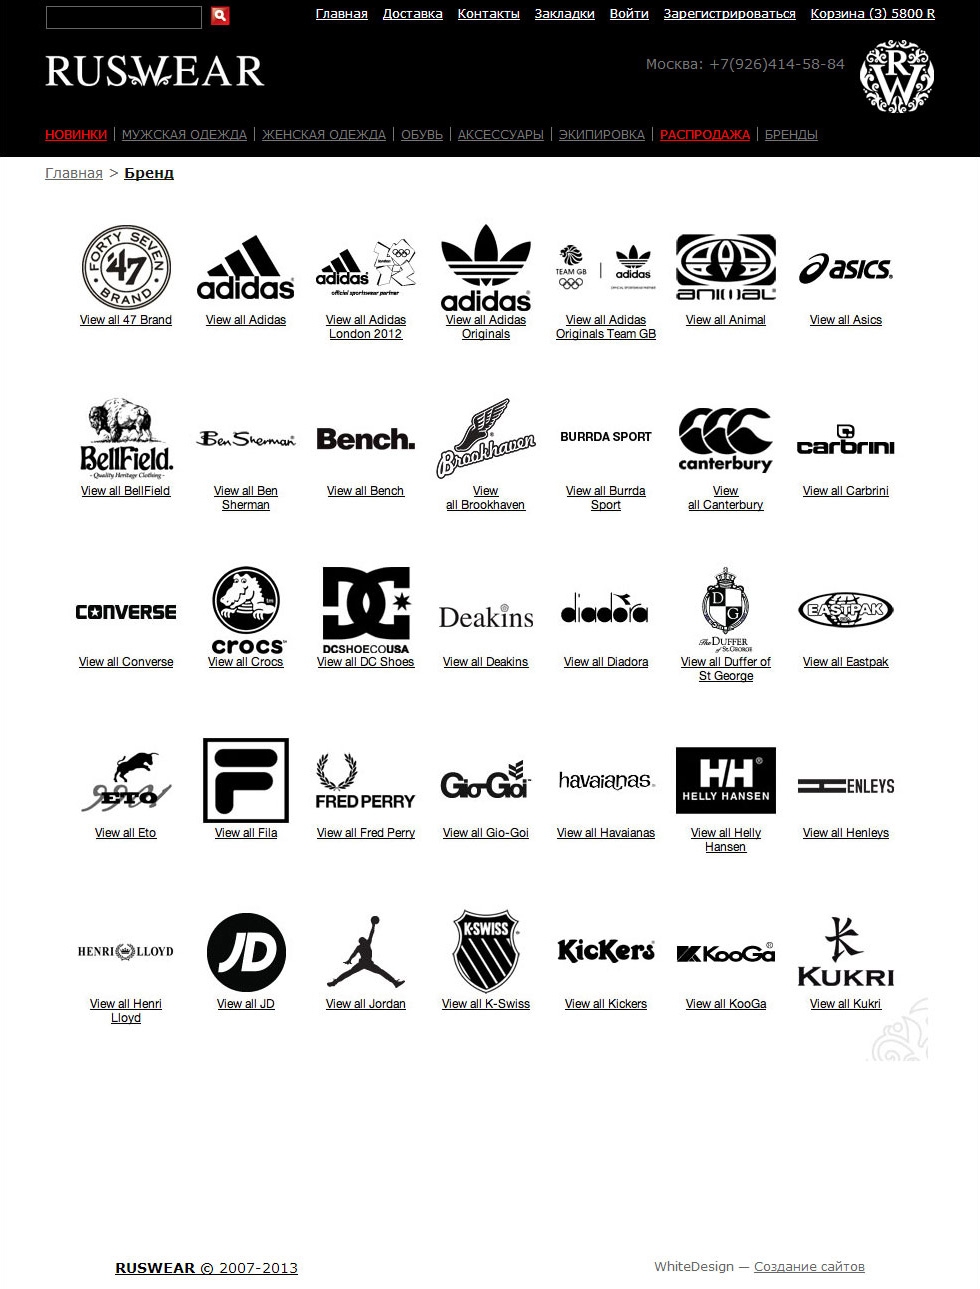 шаблон страницы брендов сайта ruswear